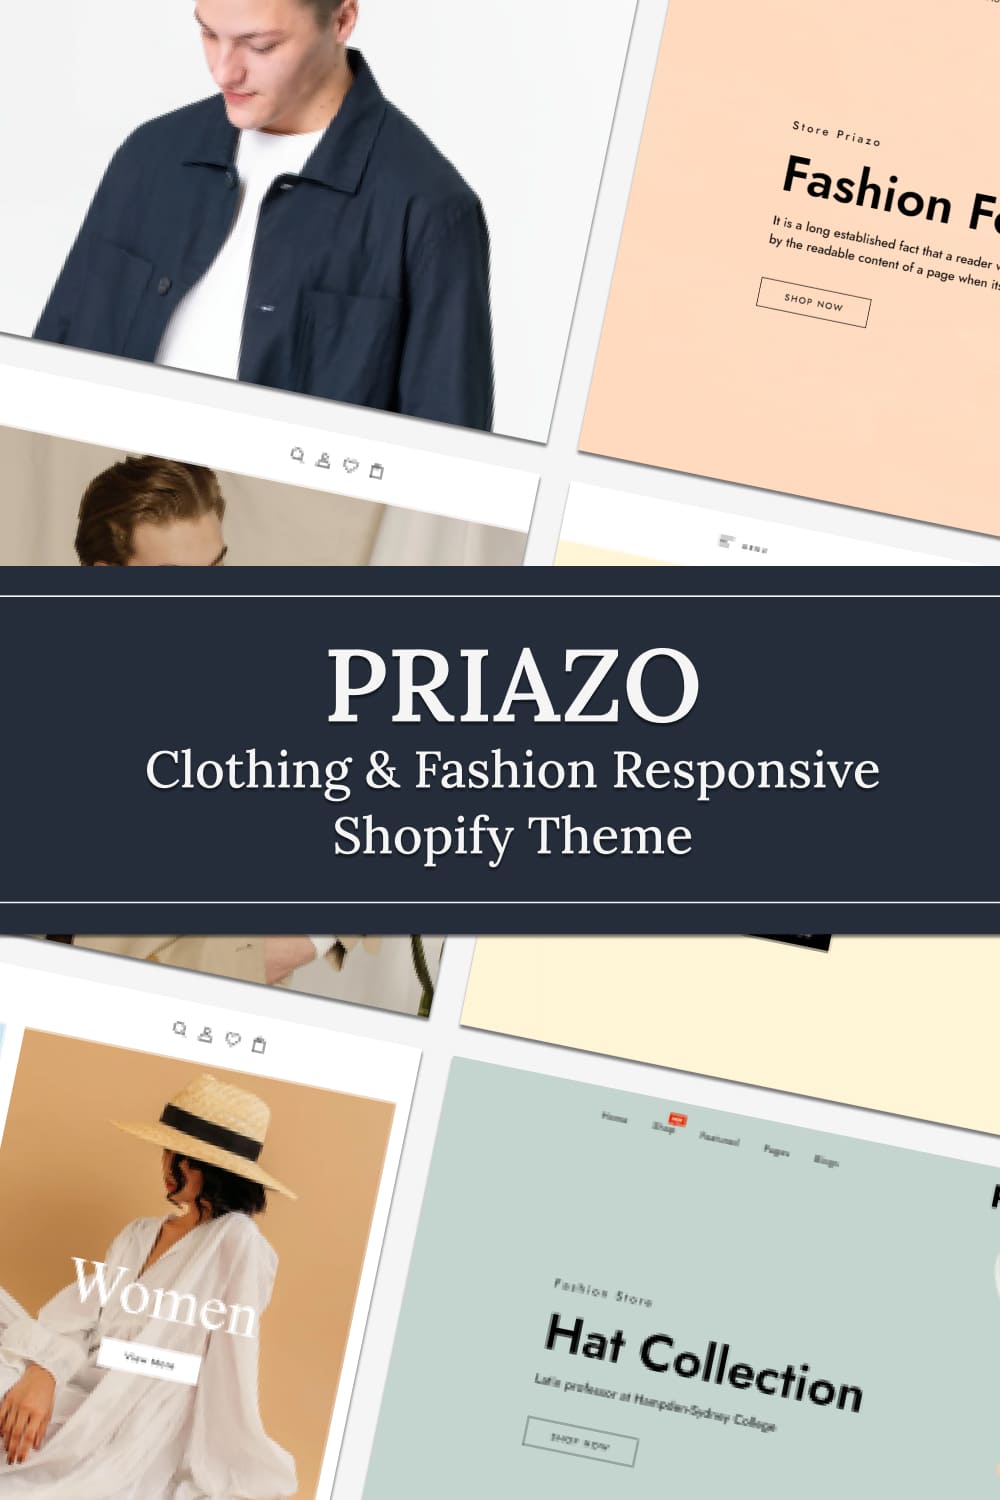 Basic collection of Priazo clothing fashion responsive shopify theme.